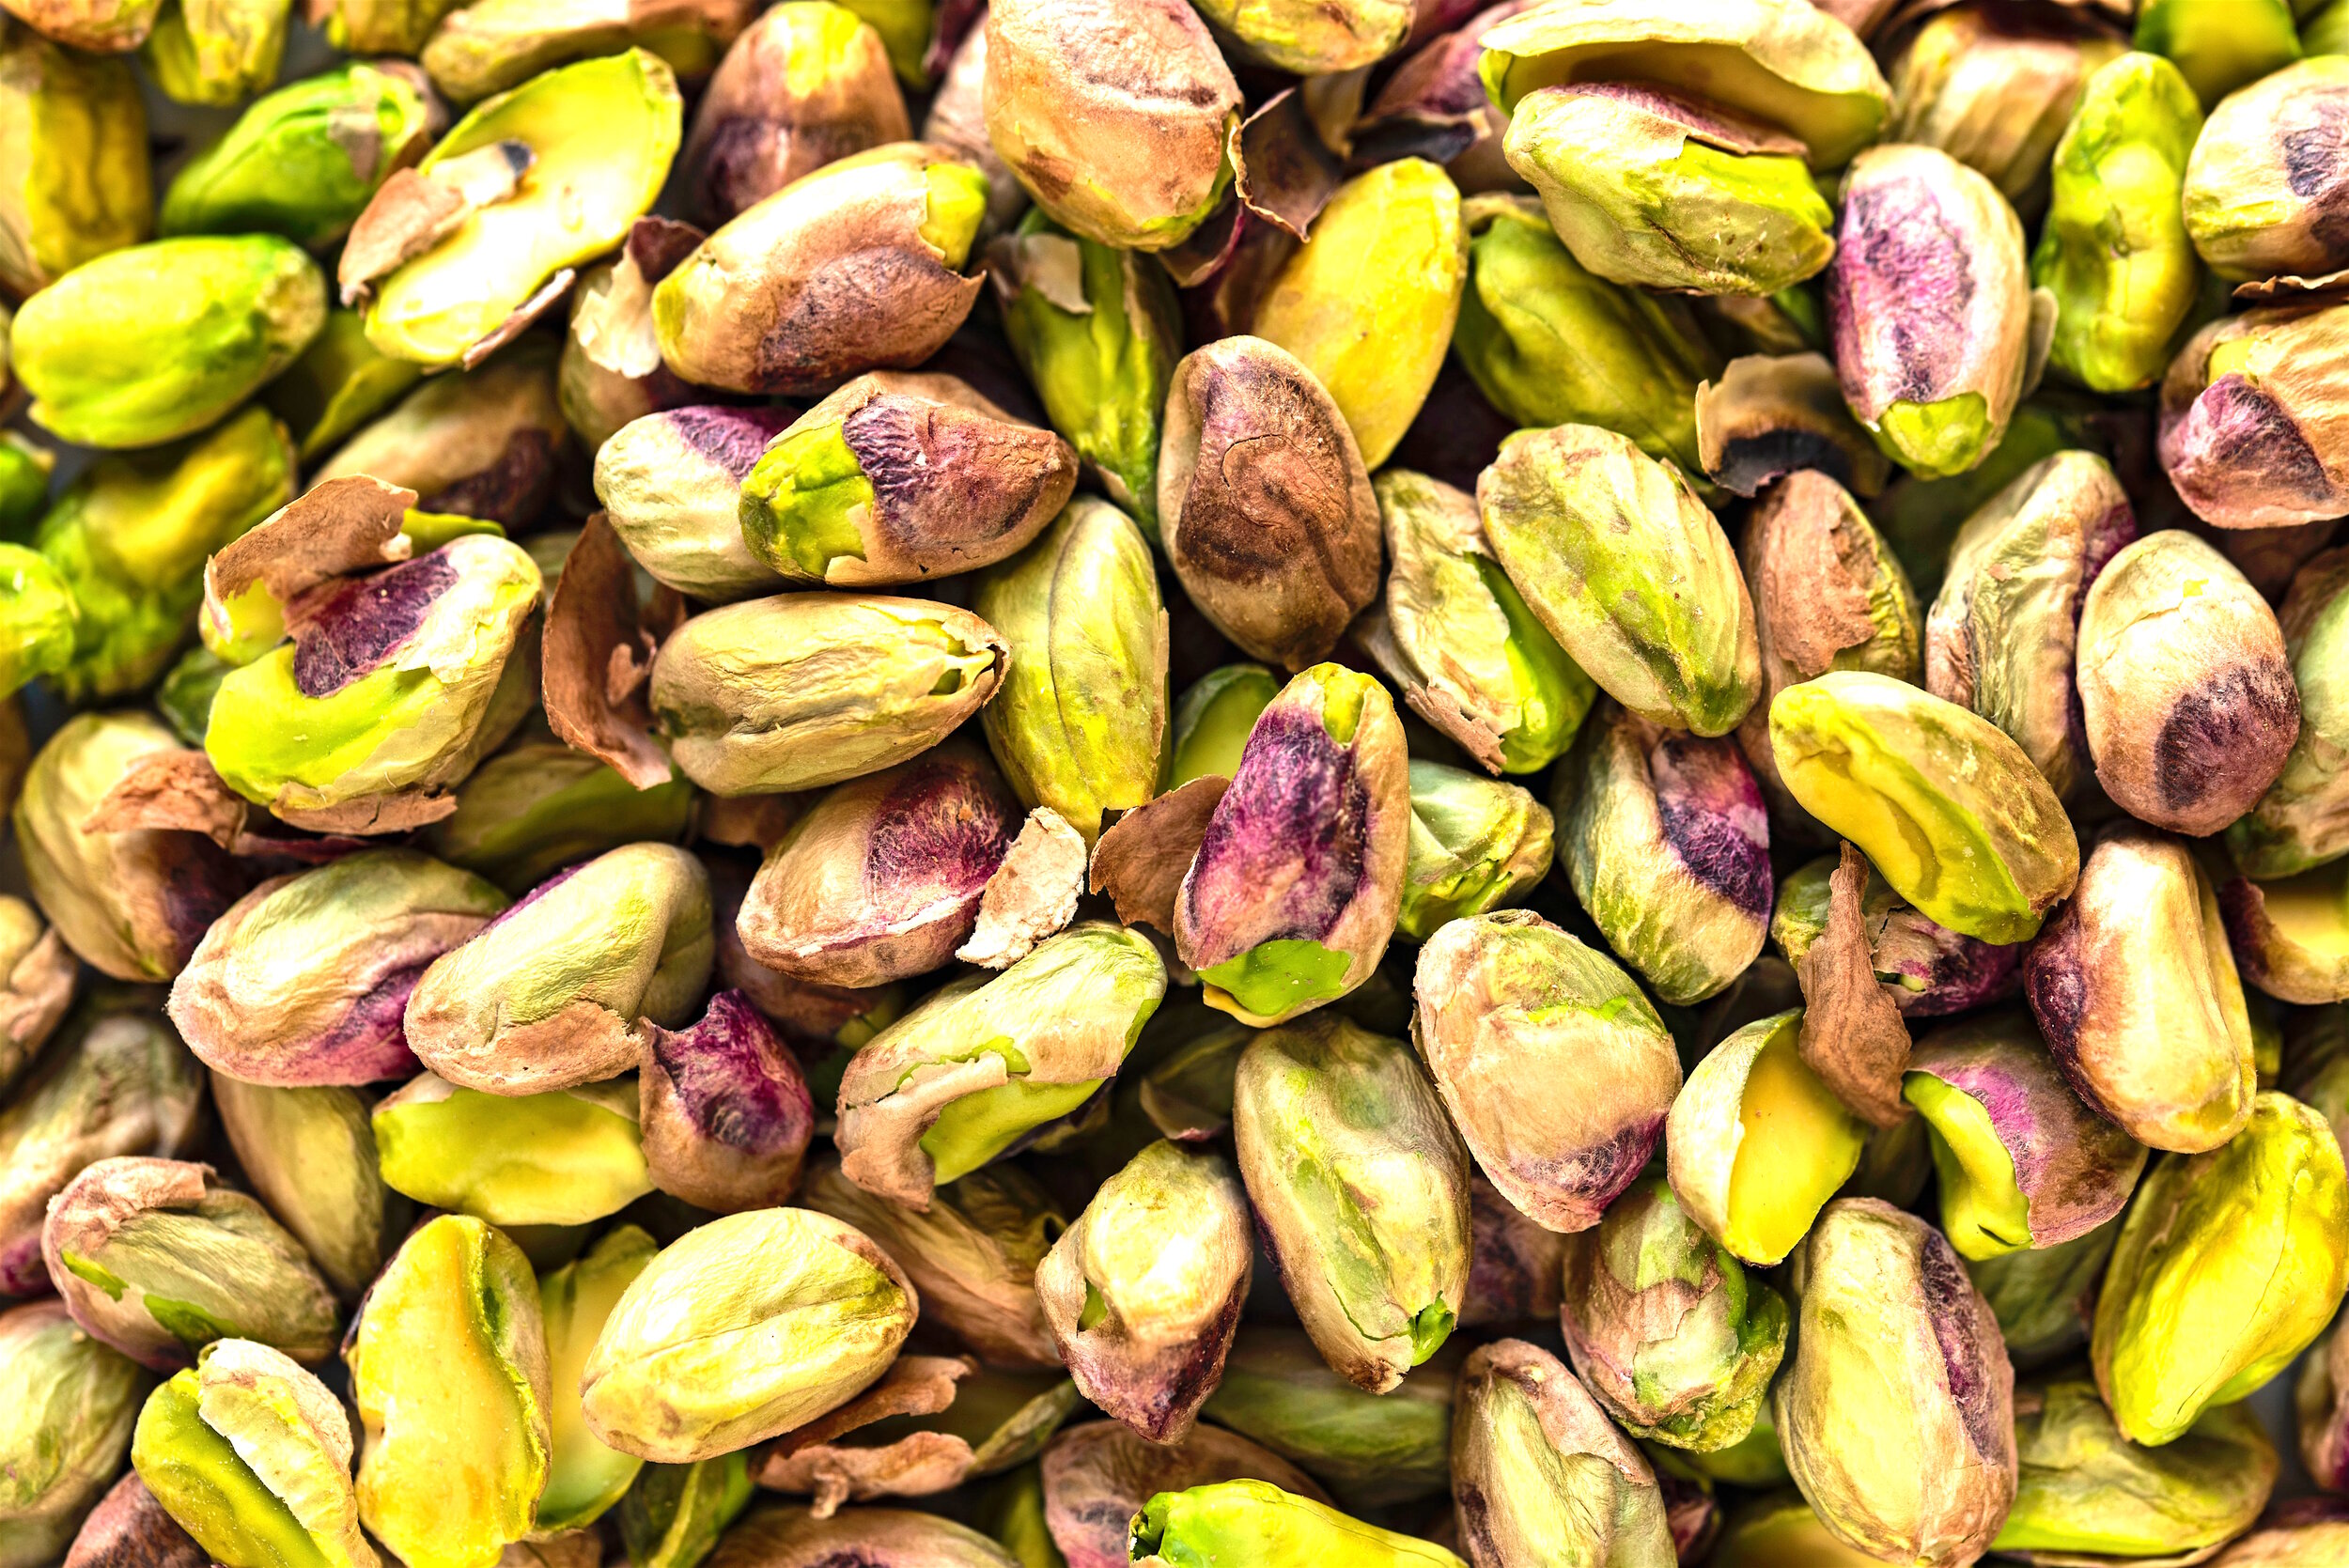 Vibrant green shelled pistachios